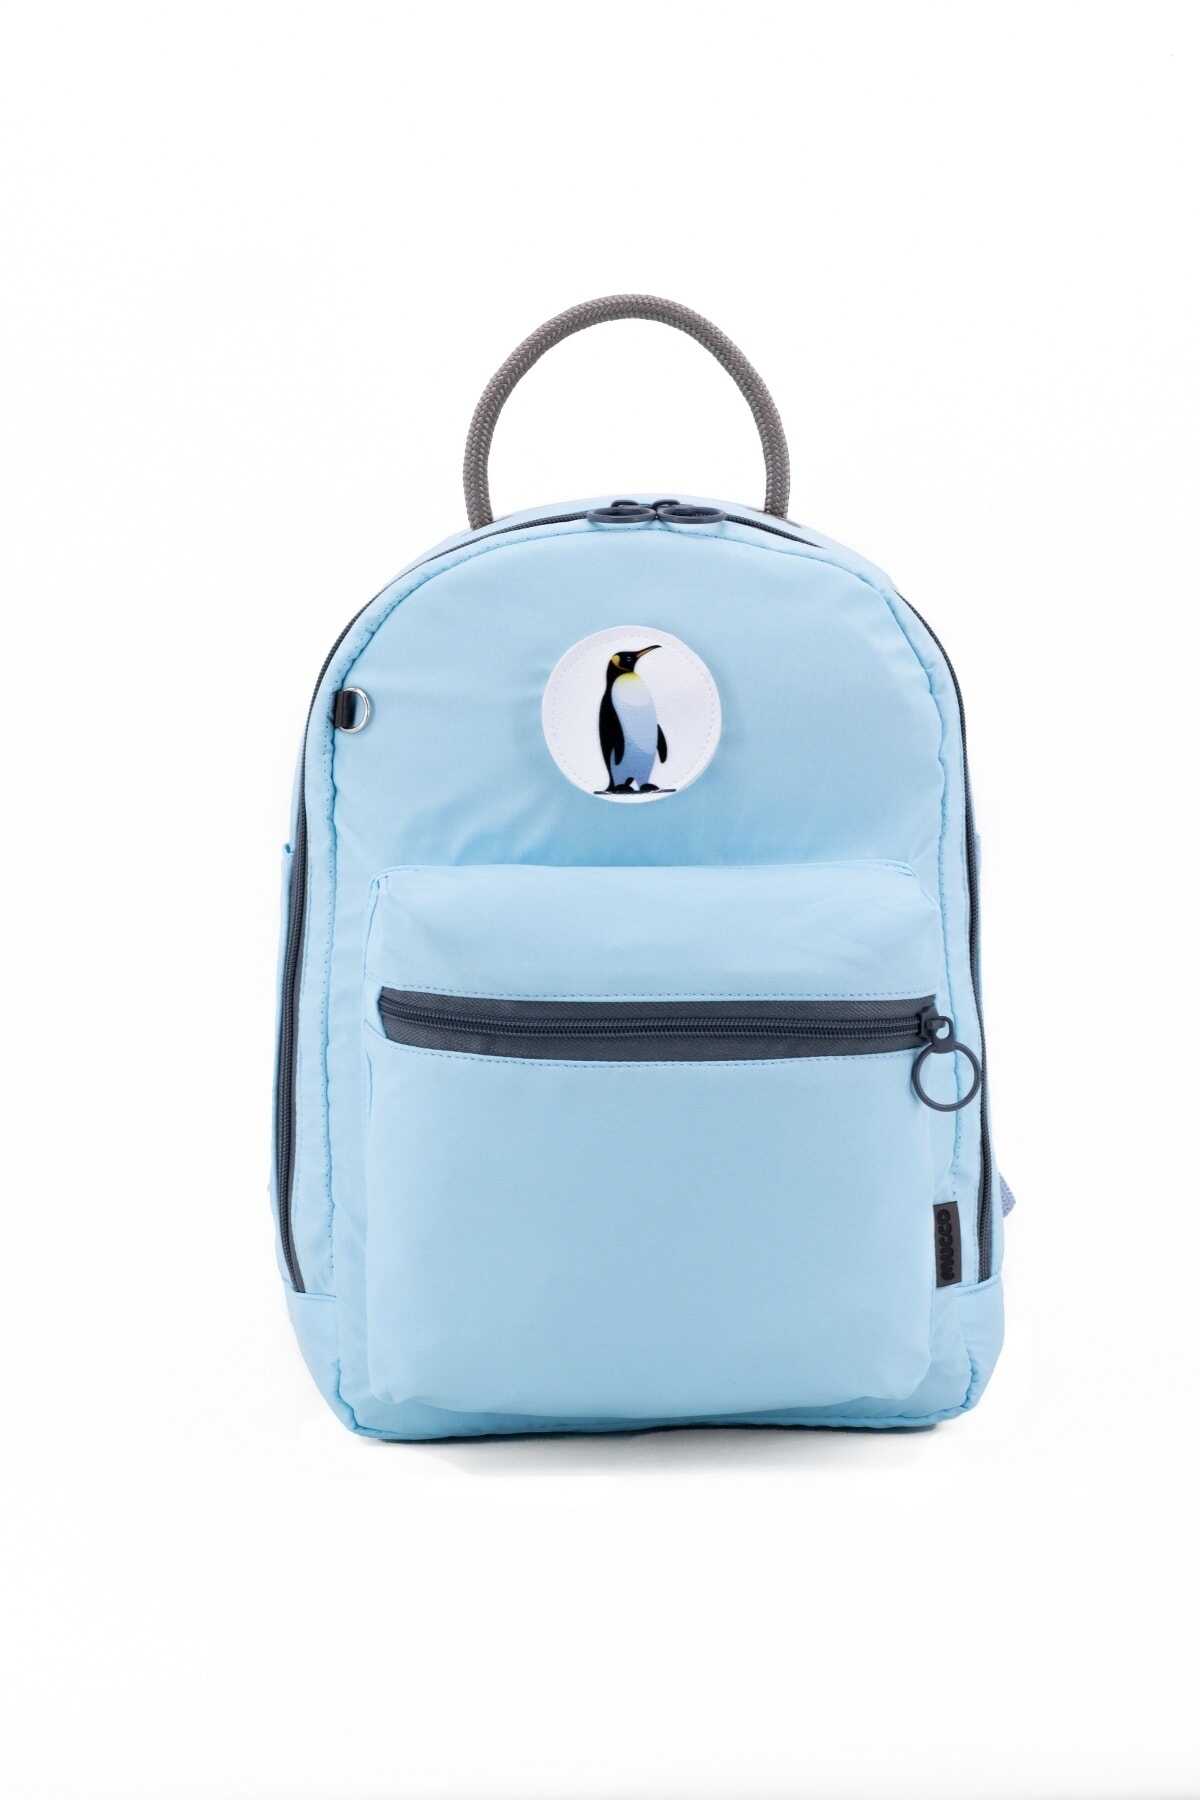 کیف لوازم کودک جیب بزرگ آبی روشن برند MUCCO 